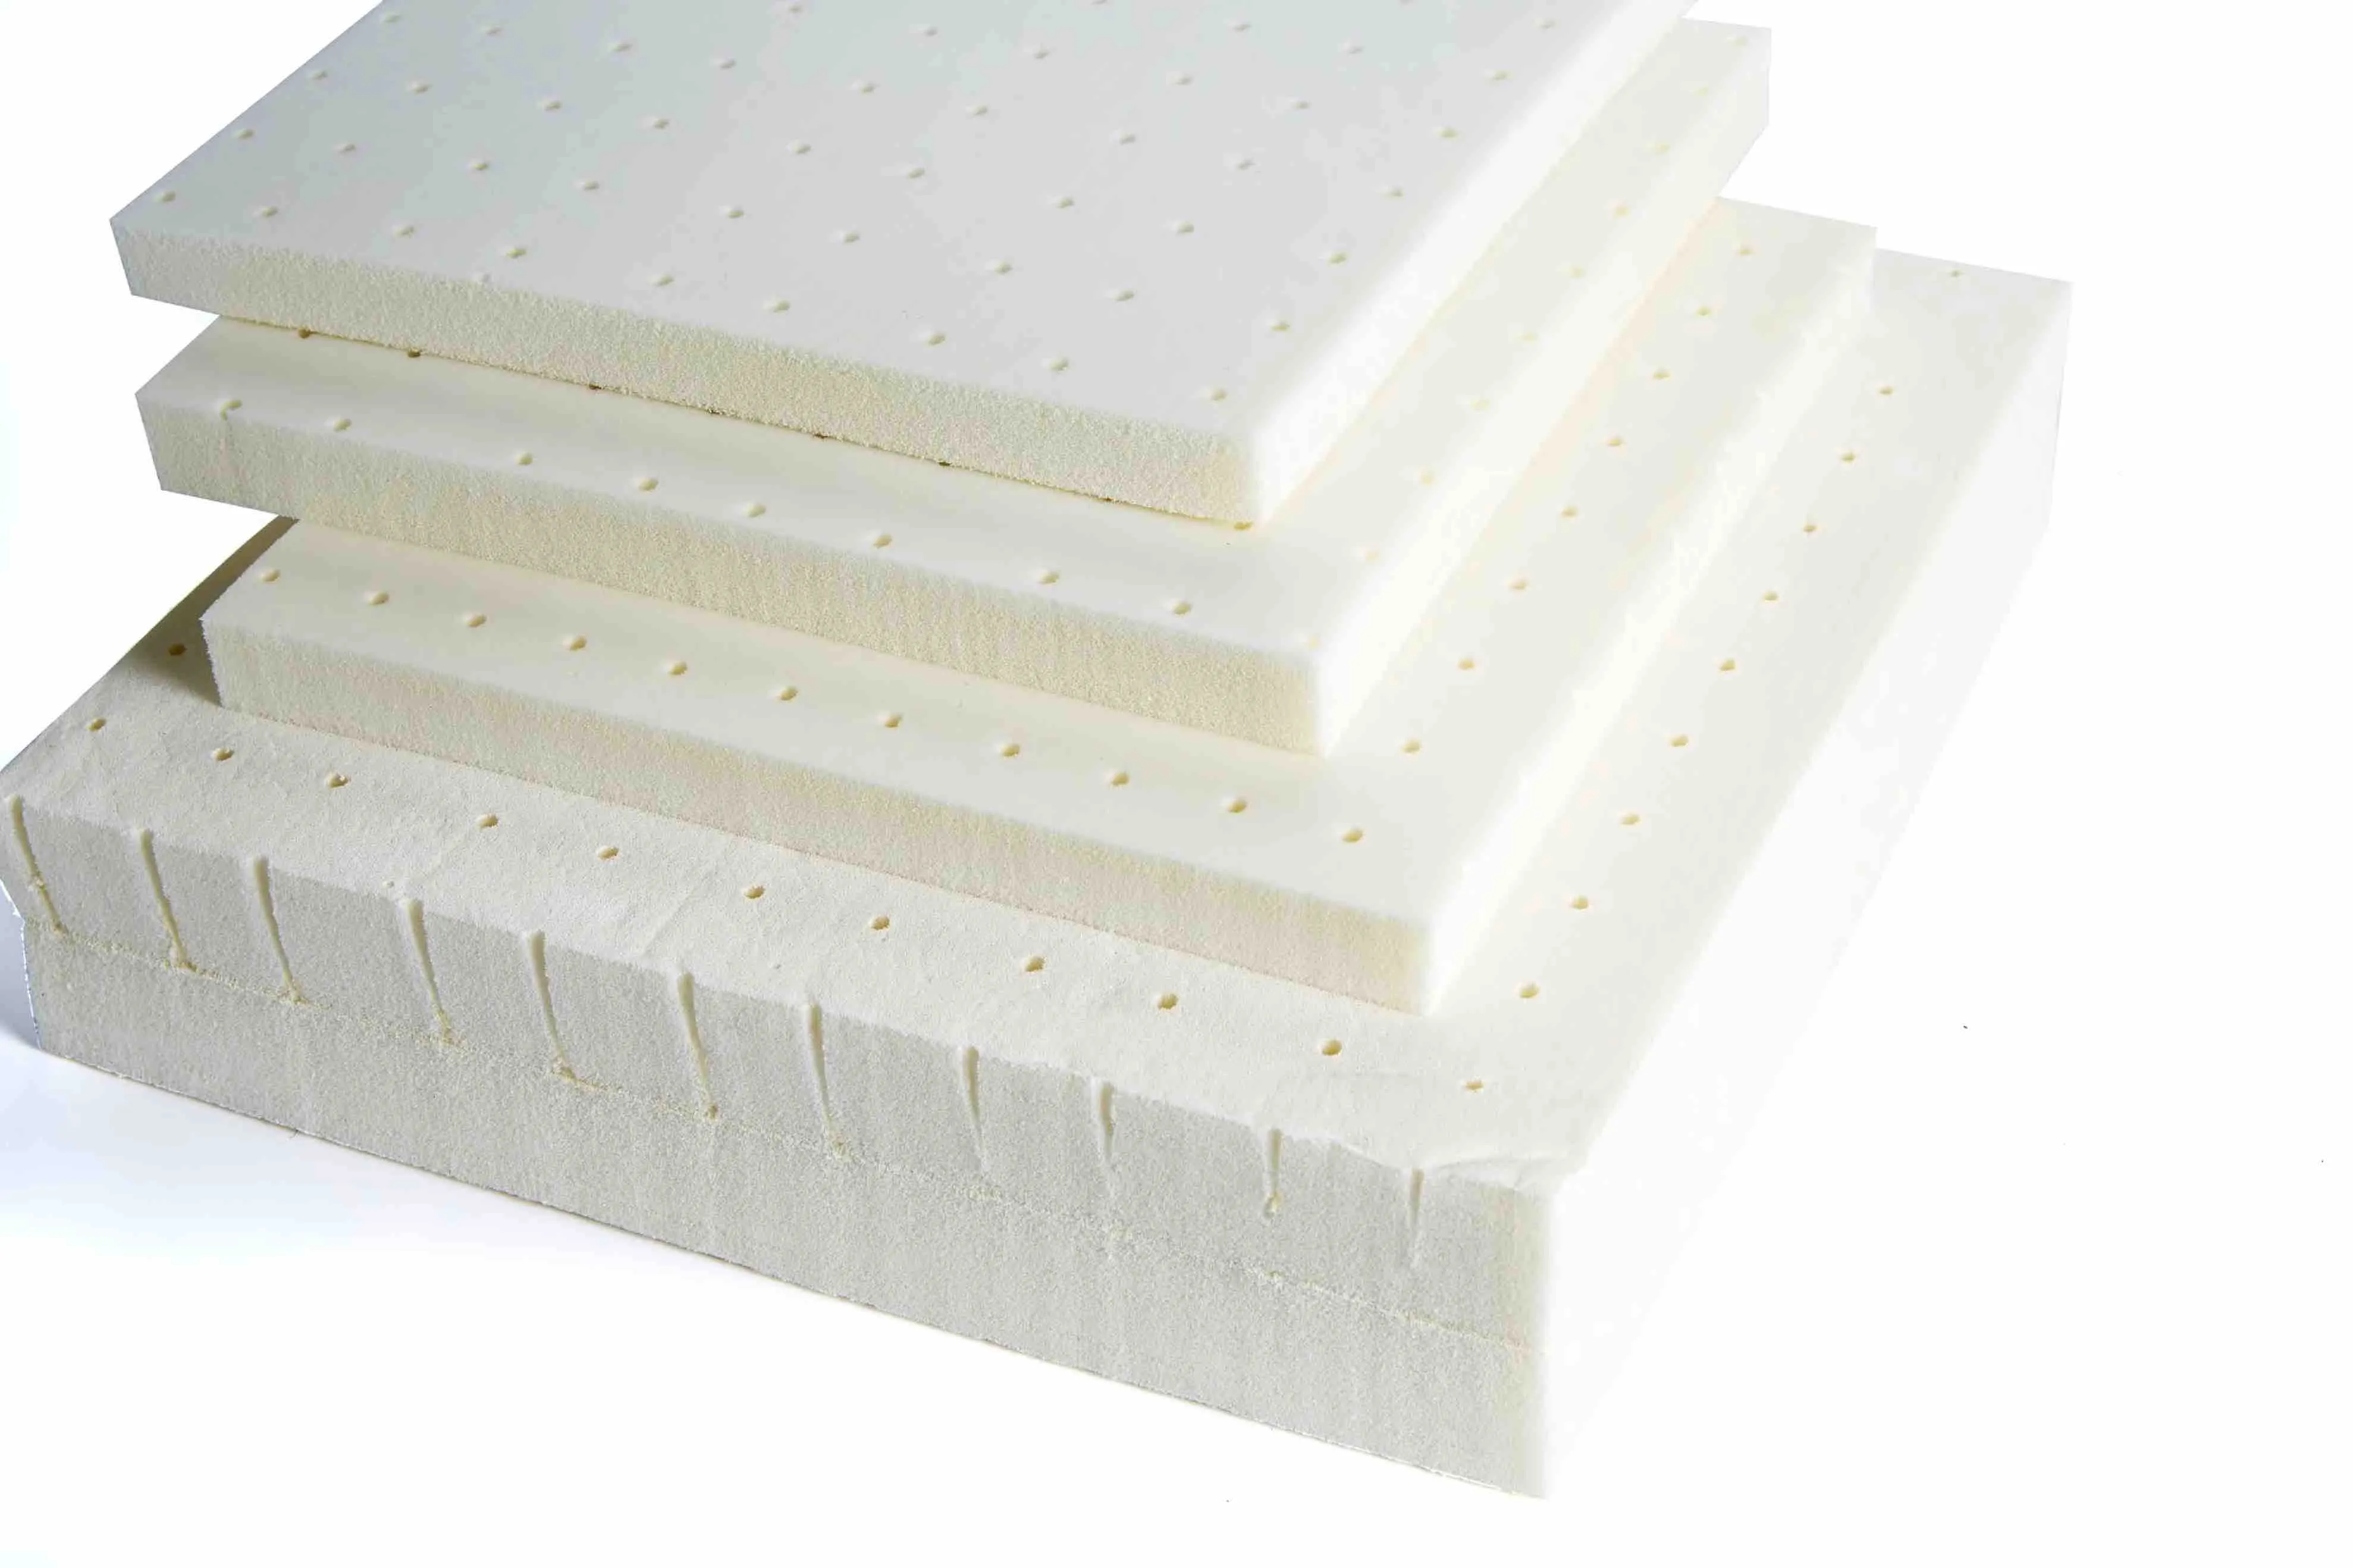 Latex mattress topper samples